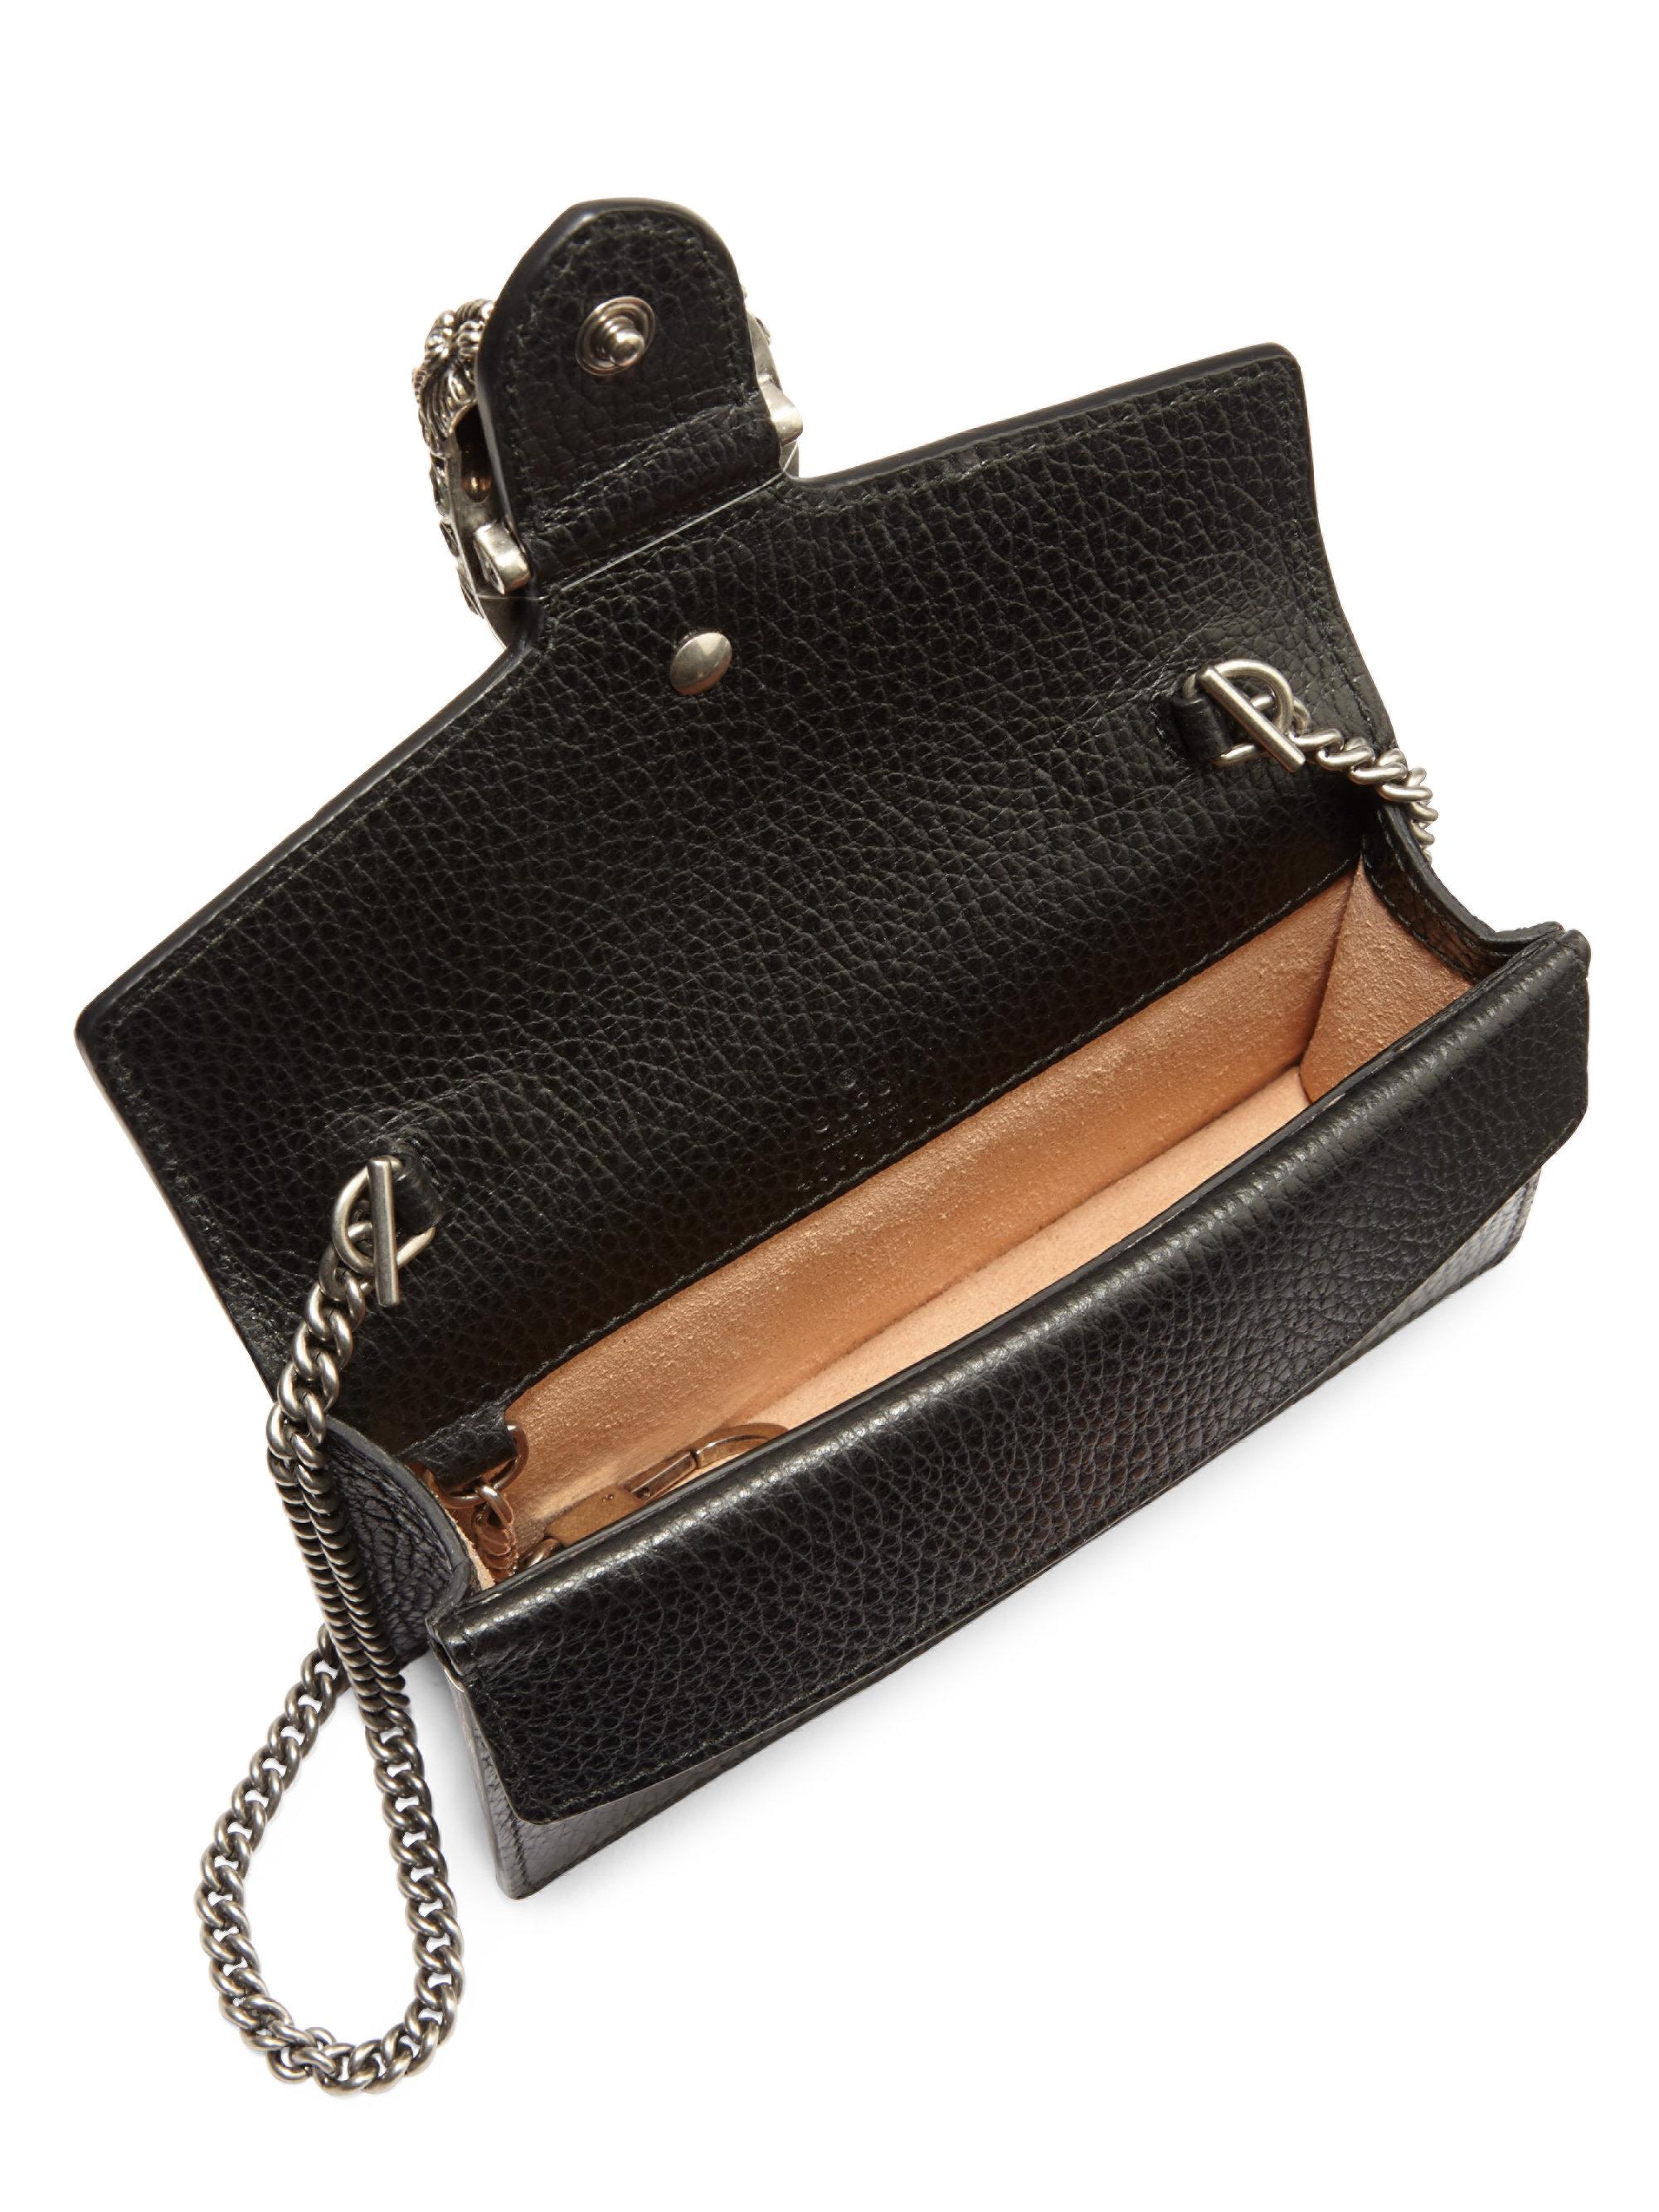 Gucci Dionysus Leather Mini Chain Shoulder Bag in Black - Lyst